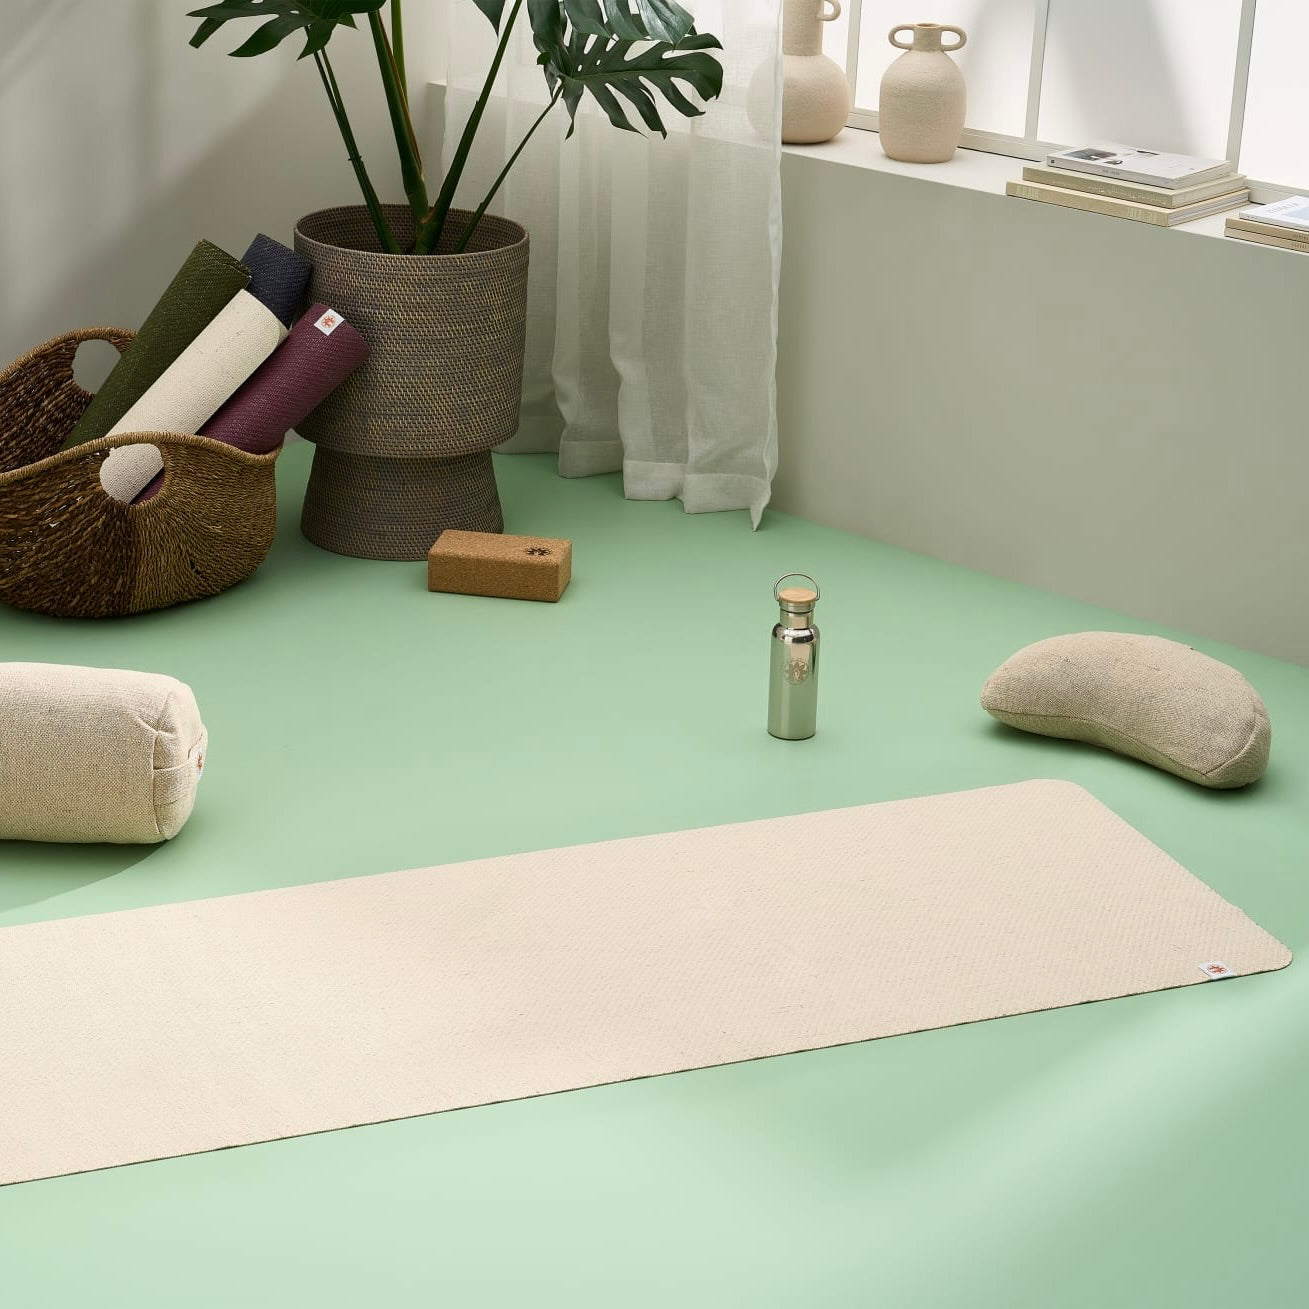 Lifestyle image of jute yoga mat, meditation cushion, yoga bolster, yoga blocks in a stylish modern home yoga studio #4mm-yoga-mat-colour_eco-natural-white